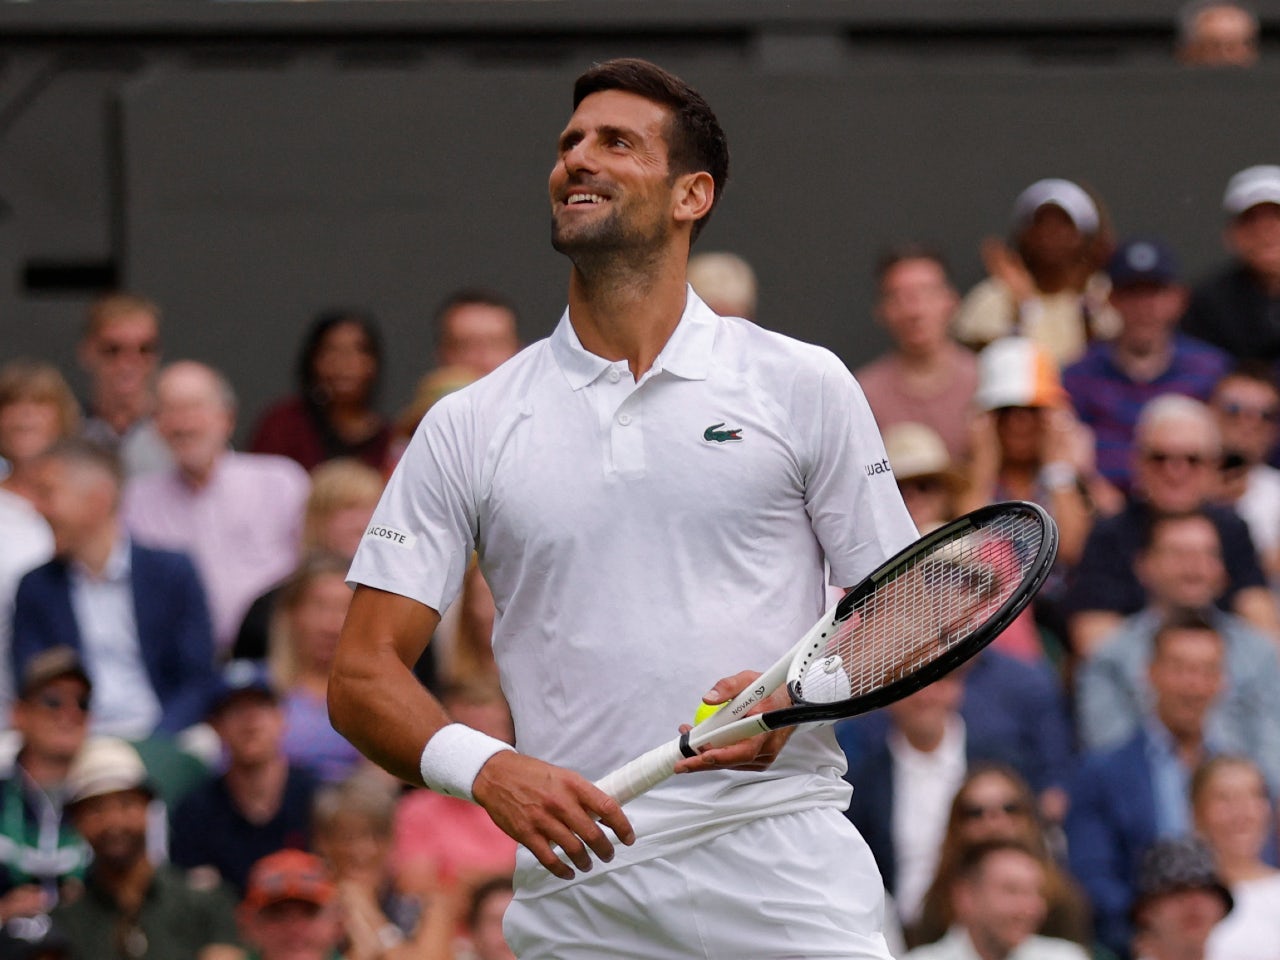 Preview: Vit Kopriva vs. Novak Djokovic - prediction, form, head-to-head